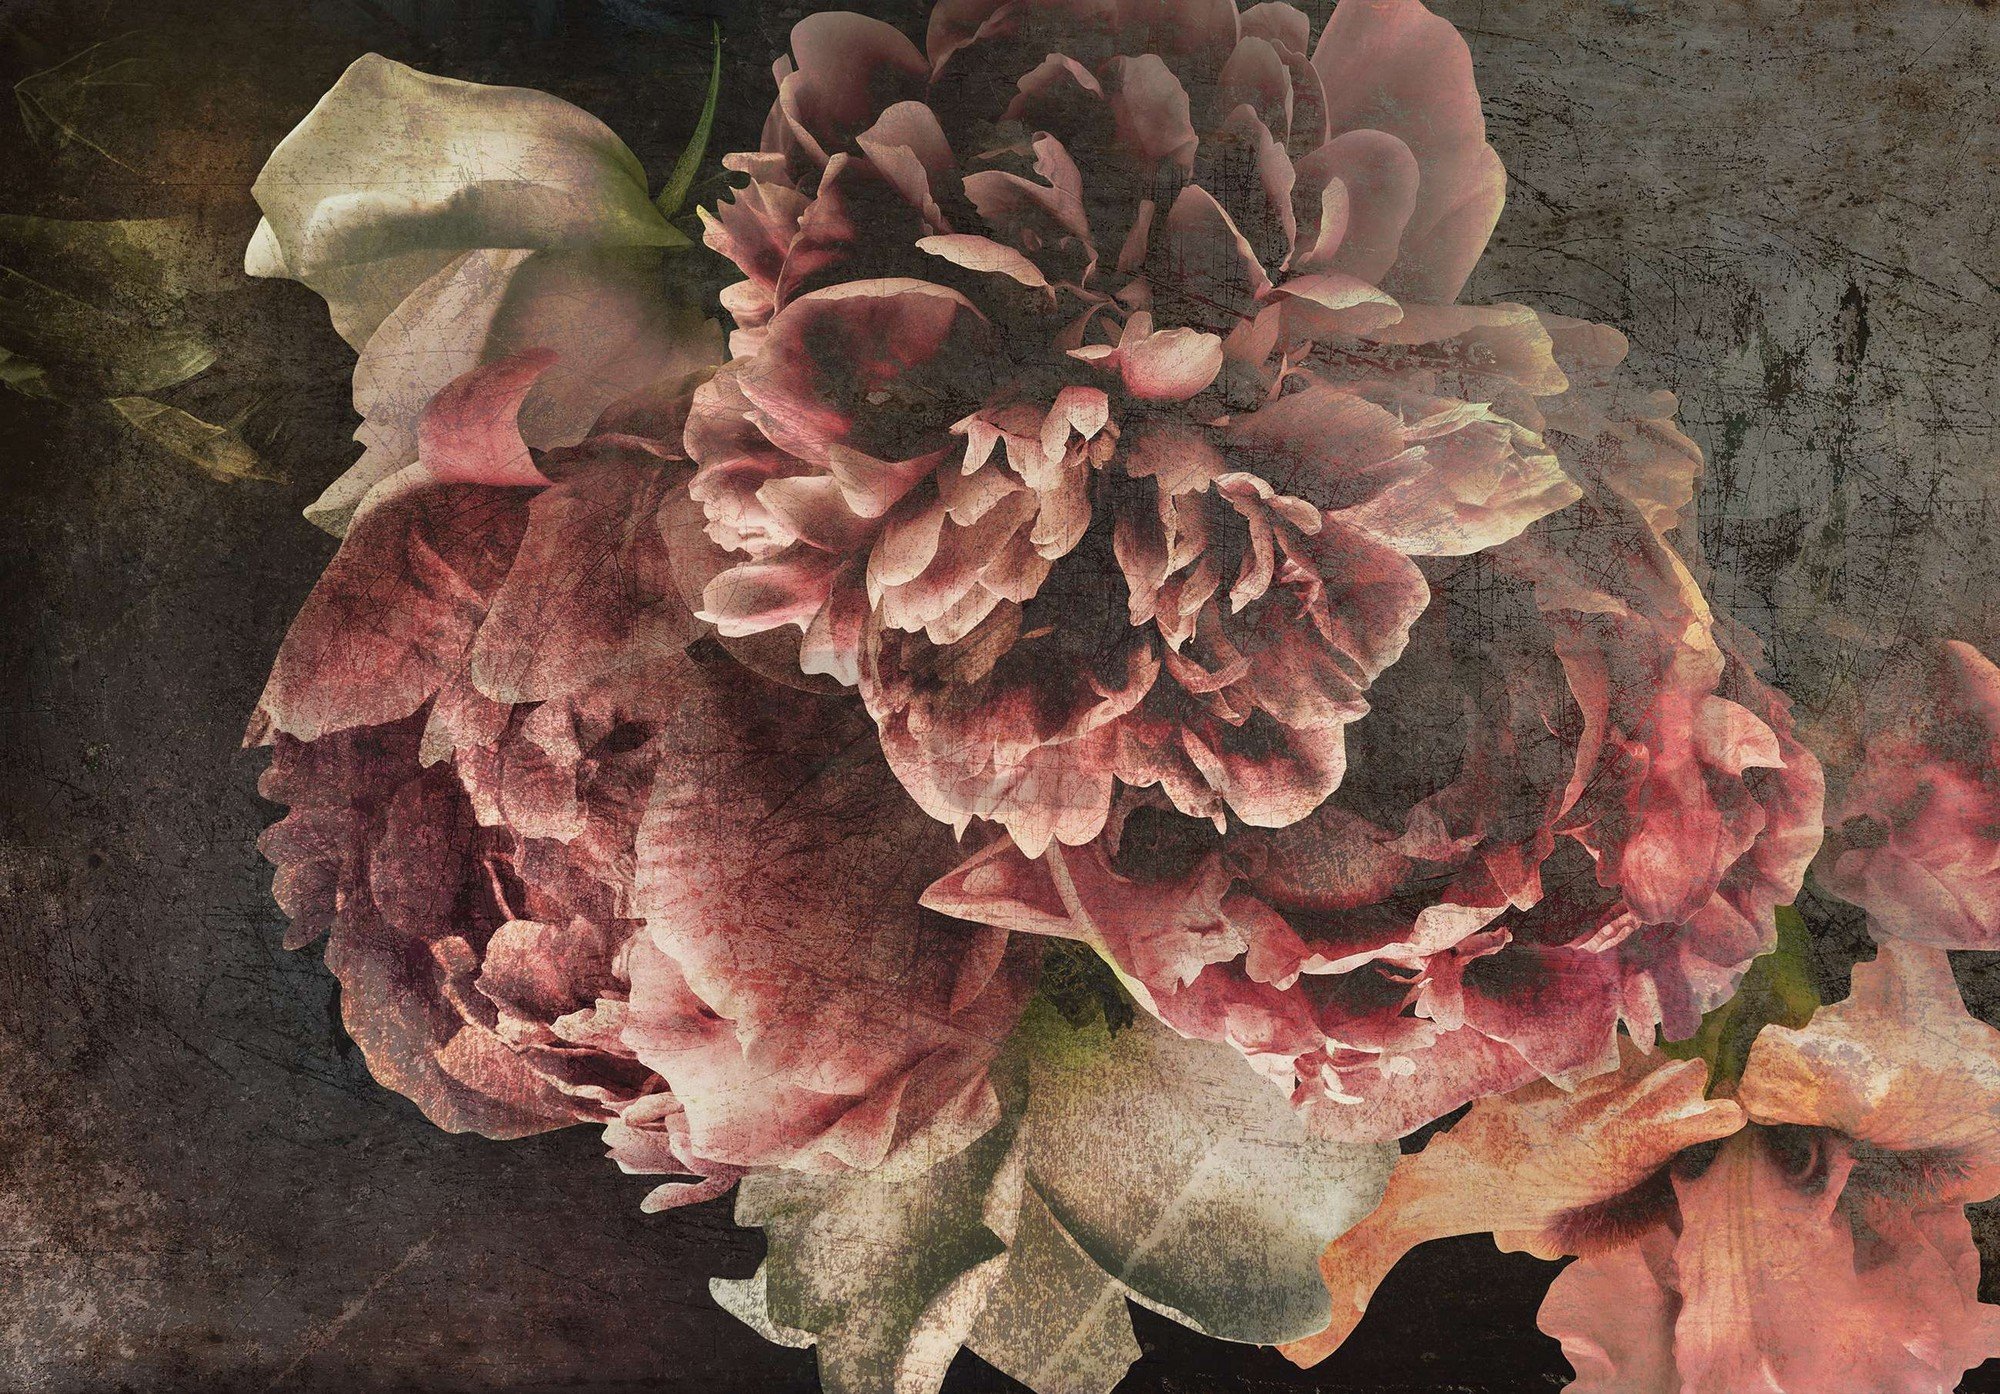 Vlies fotótapéta: Bazsarózsa virágok - 254x184 cm